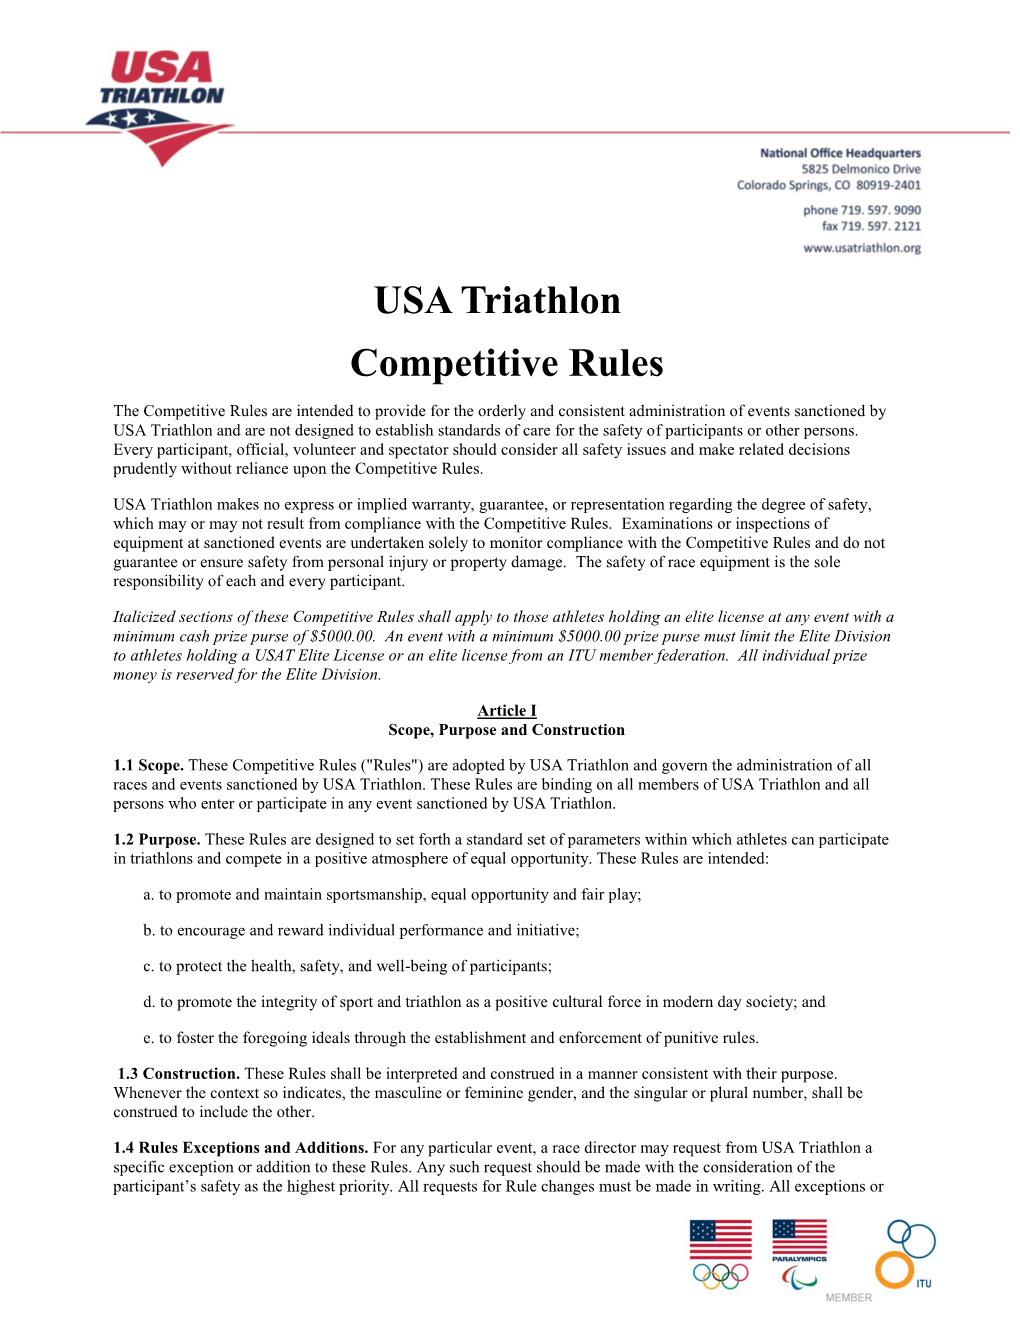 USA Triathlon Competitive Rules